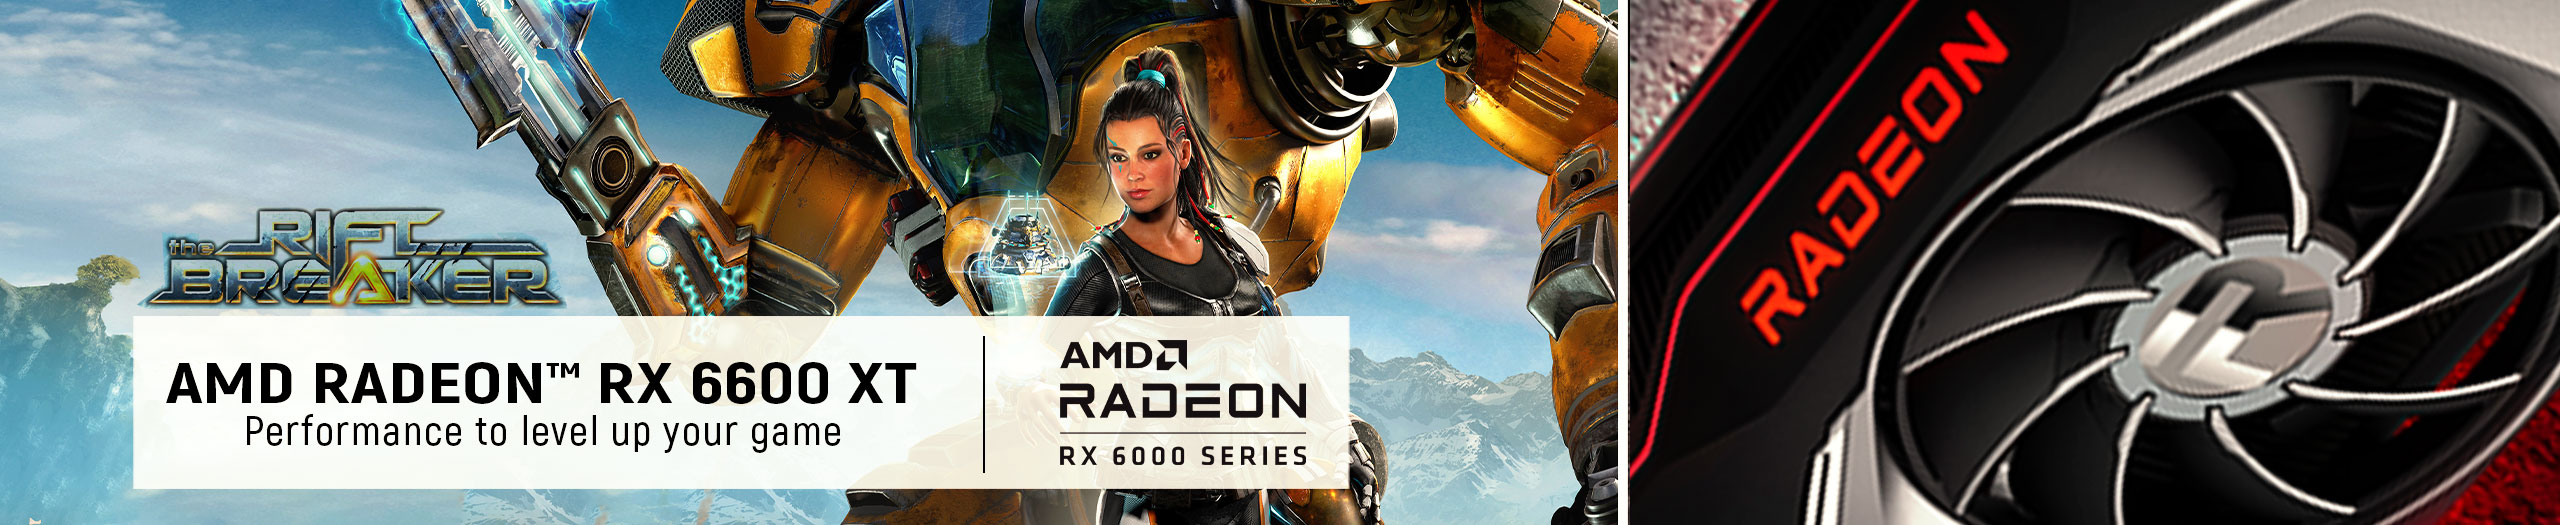 AMD Radeon RX 6600 Gaming PCs